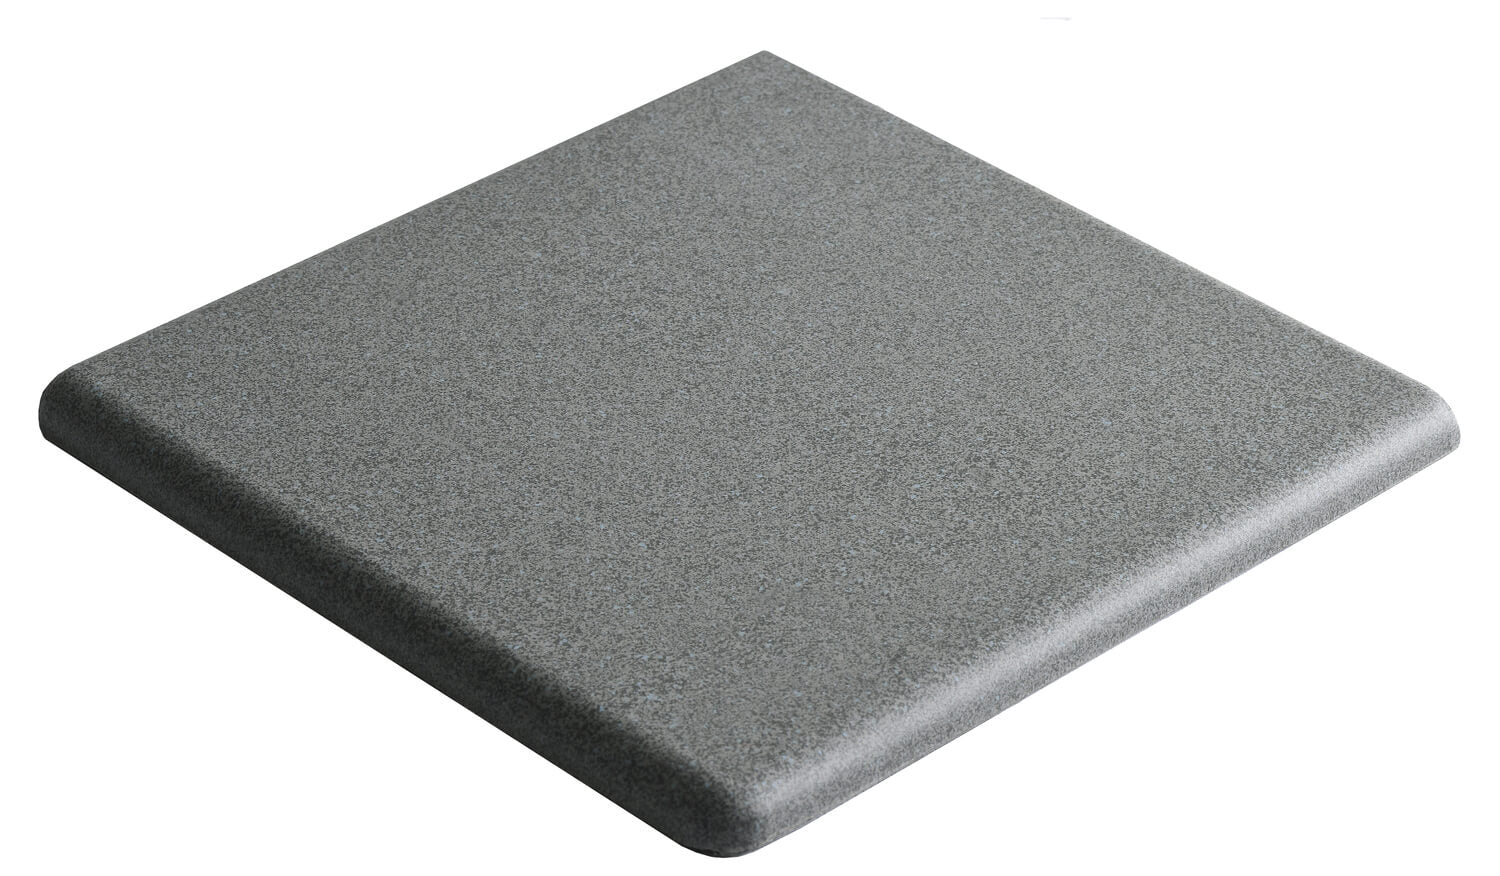 Dorset Woolliscroft Dark Grey Round Edge External Slip Resistant Quarry Tile 148x148mm